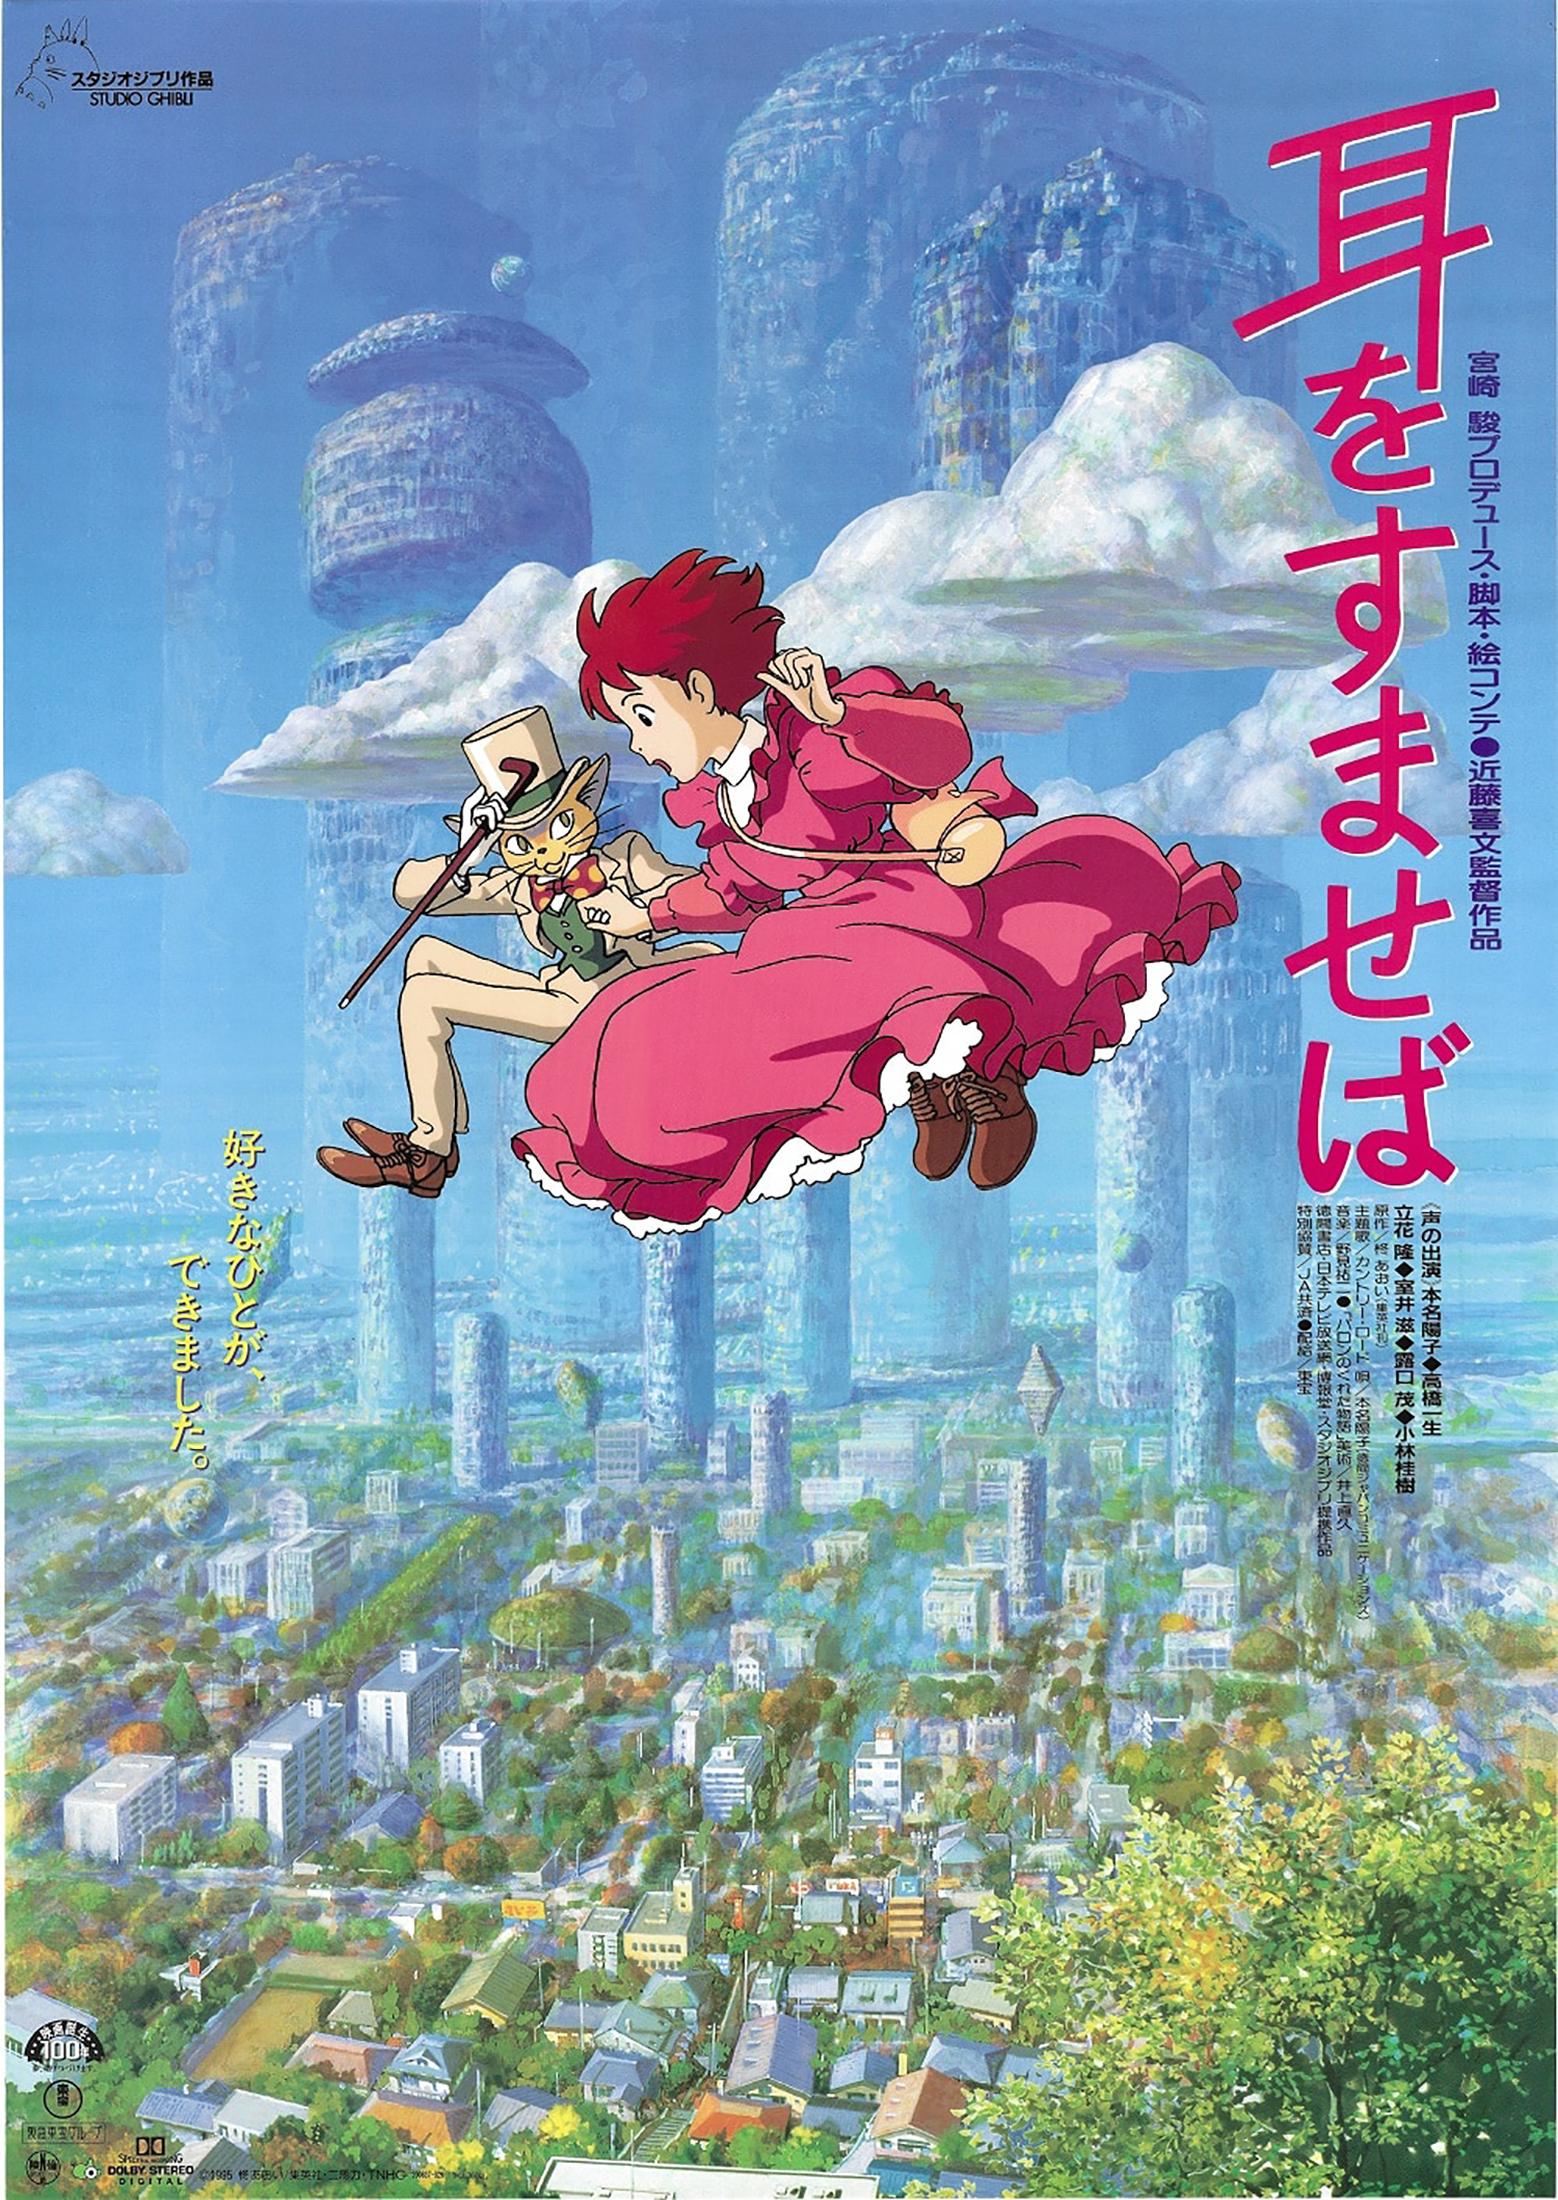 Unknown Print - Whisper of the Heart Original Vintage Large Movie Poster, Studio Ghibli (1995)